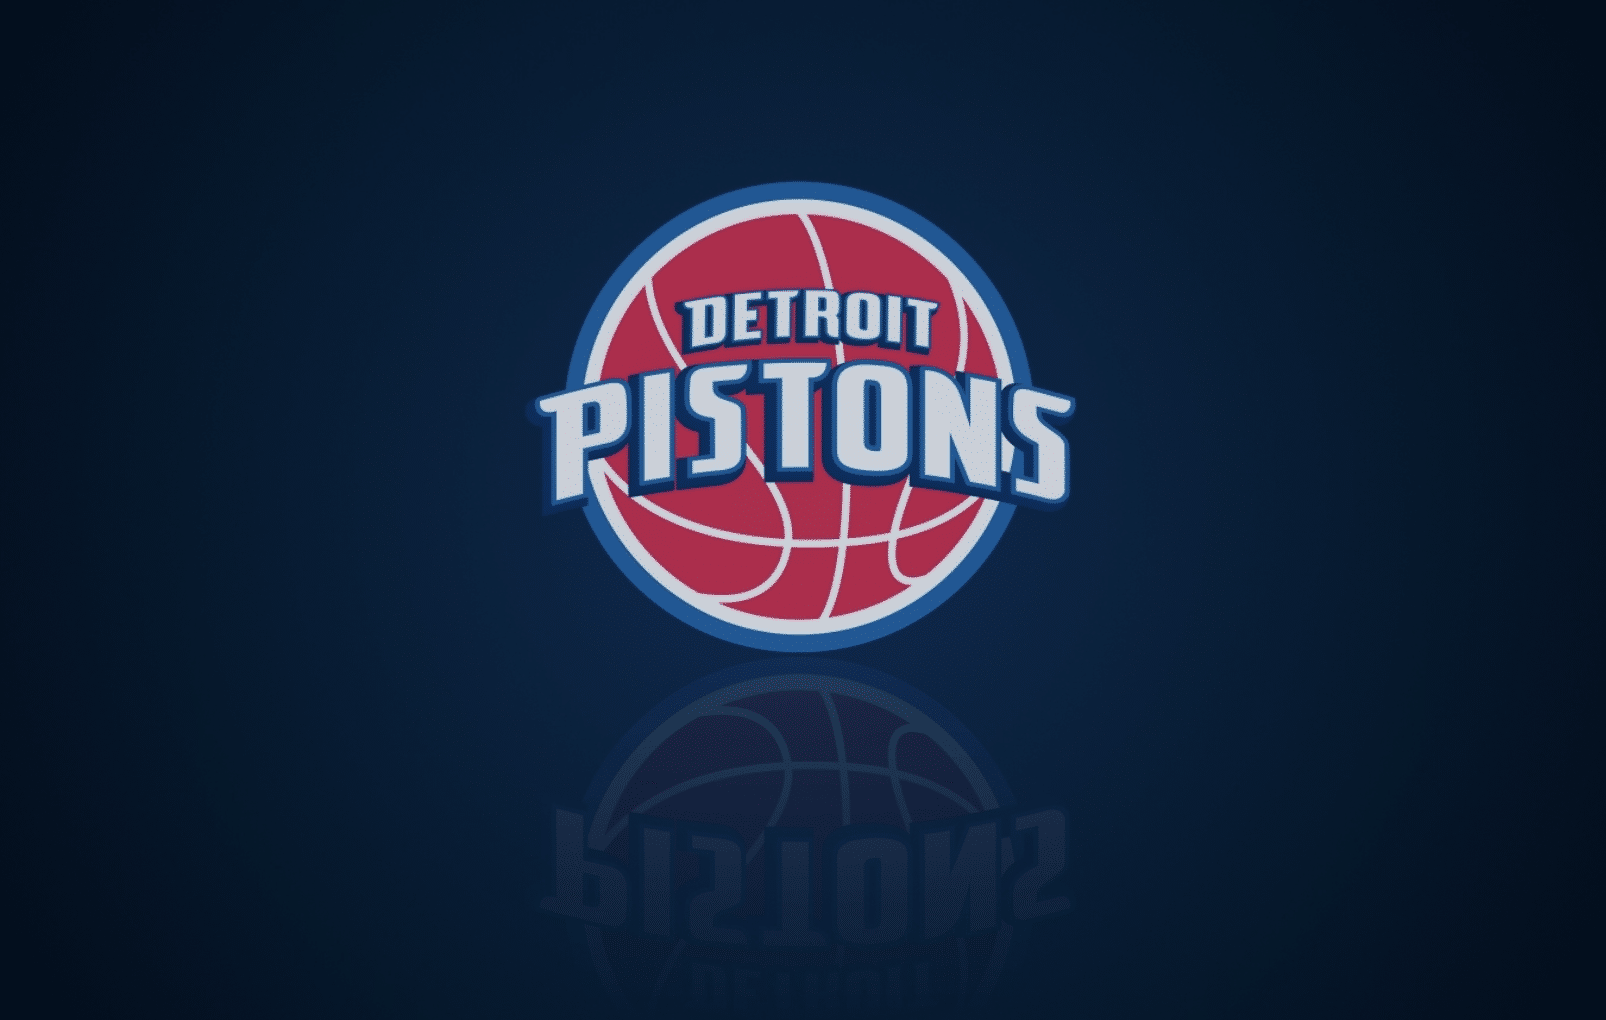 Detroit Pistons pre-season schedule